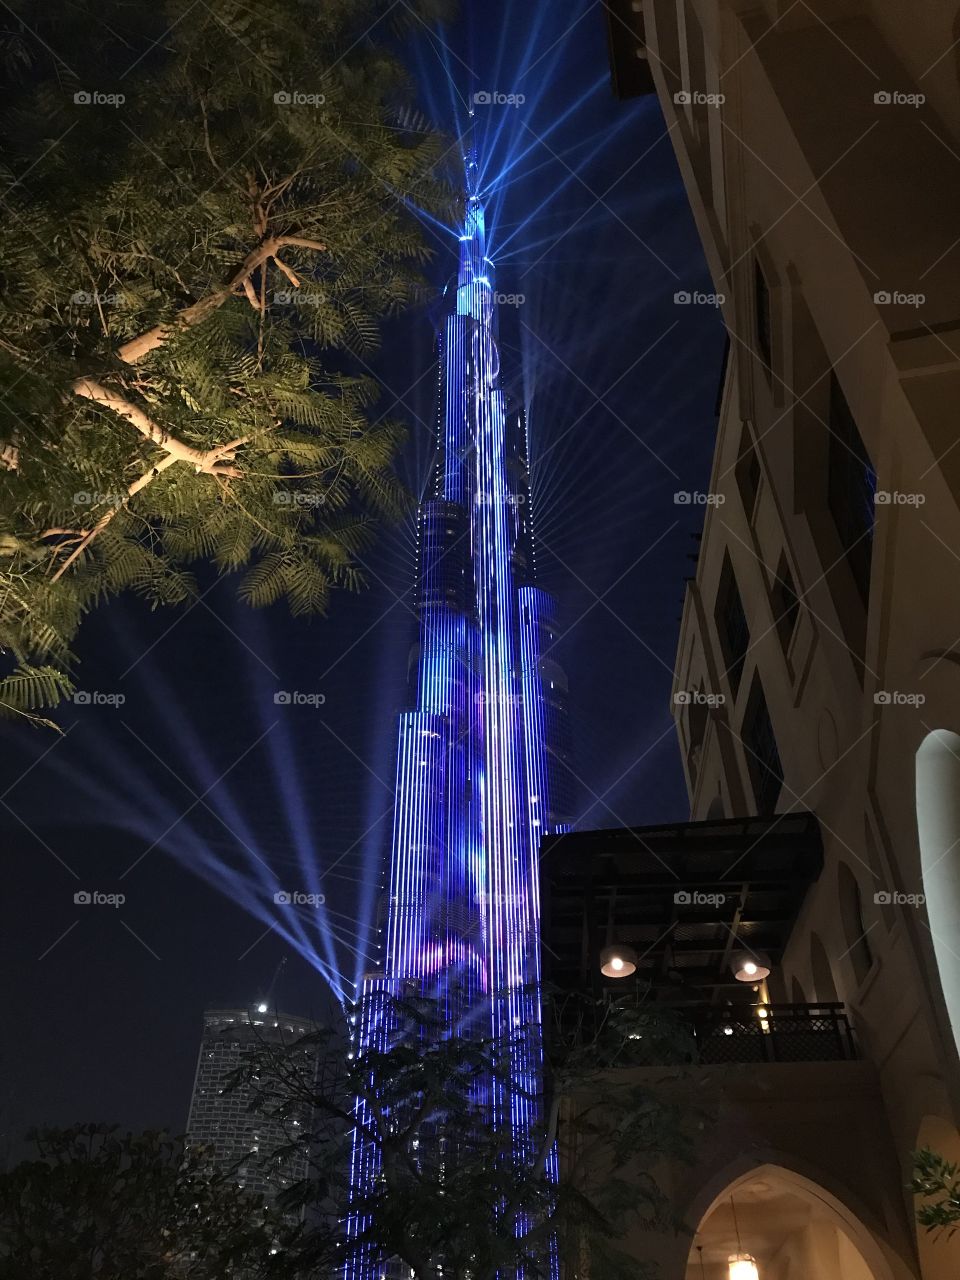 Lasershow@ Burj Khalifa